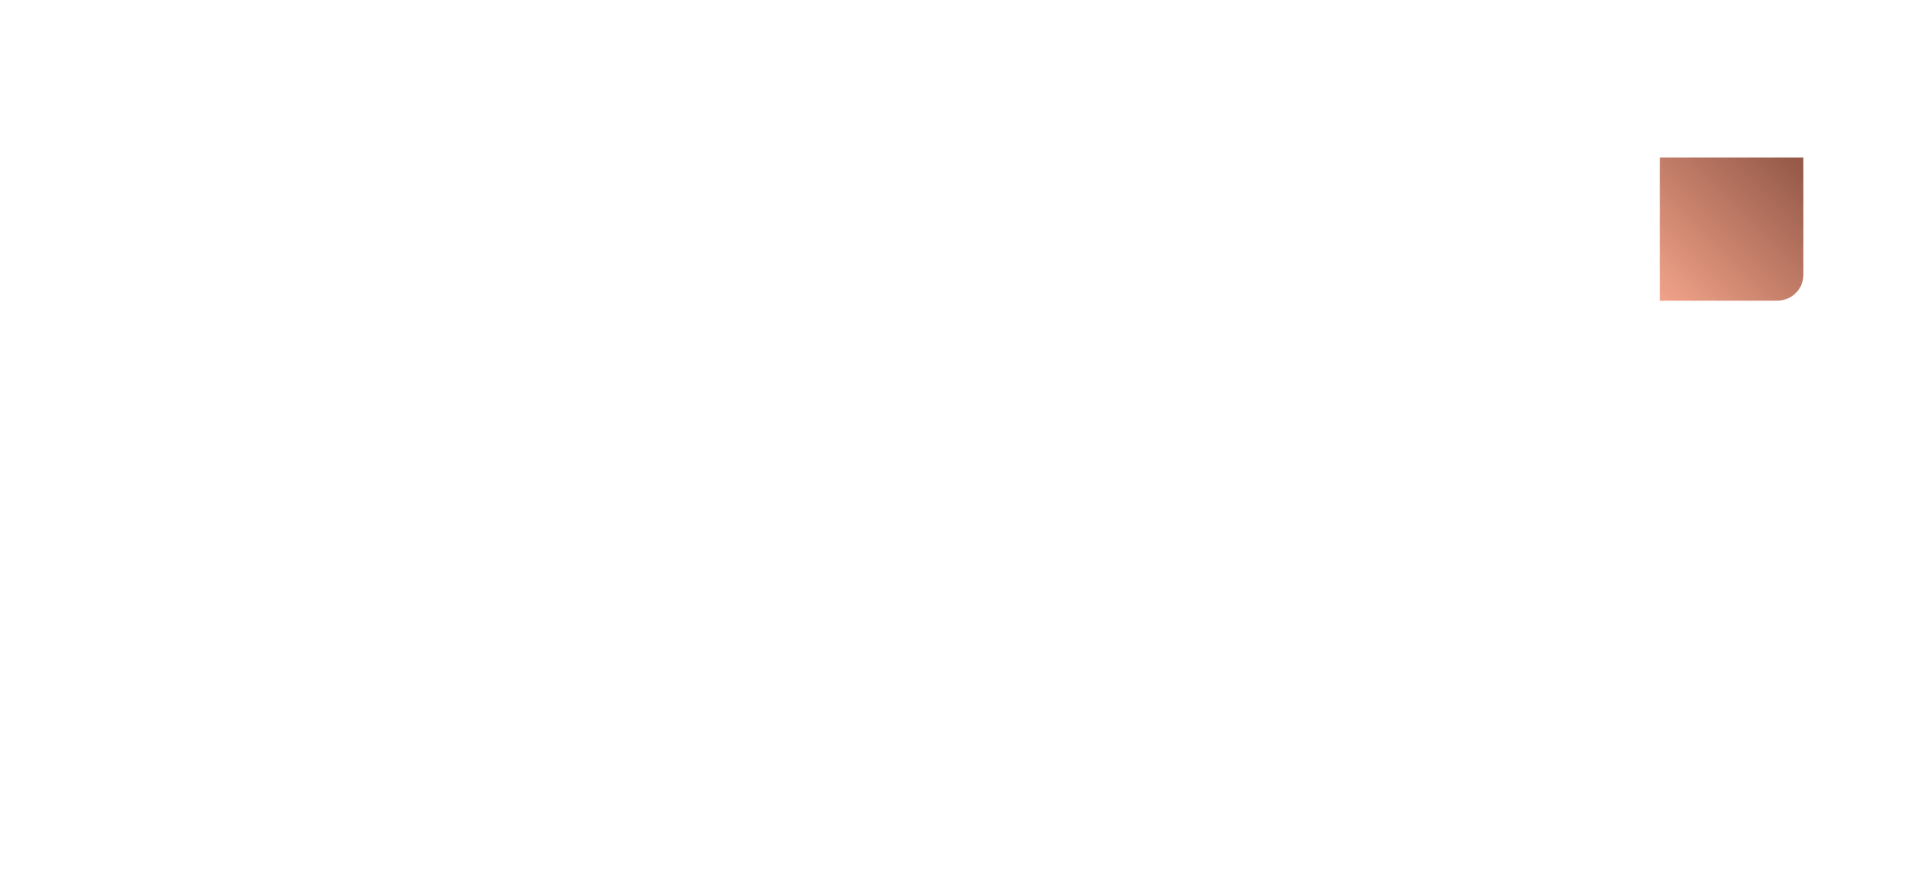 logo-i2t